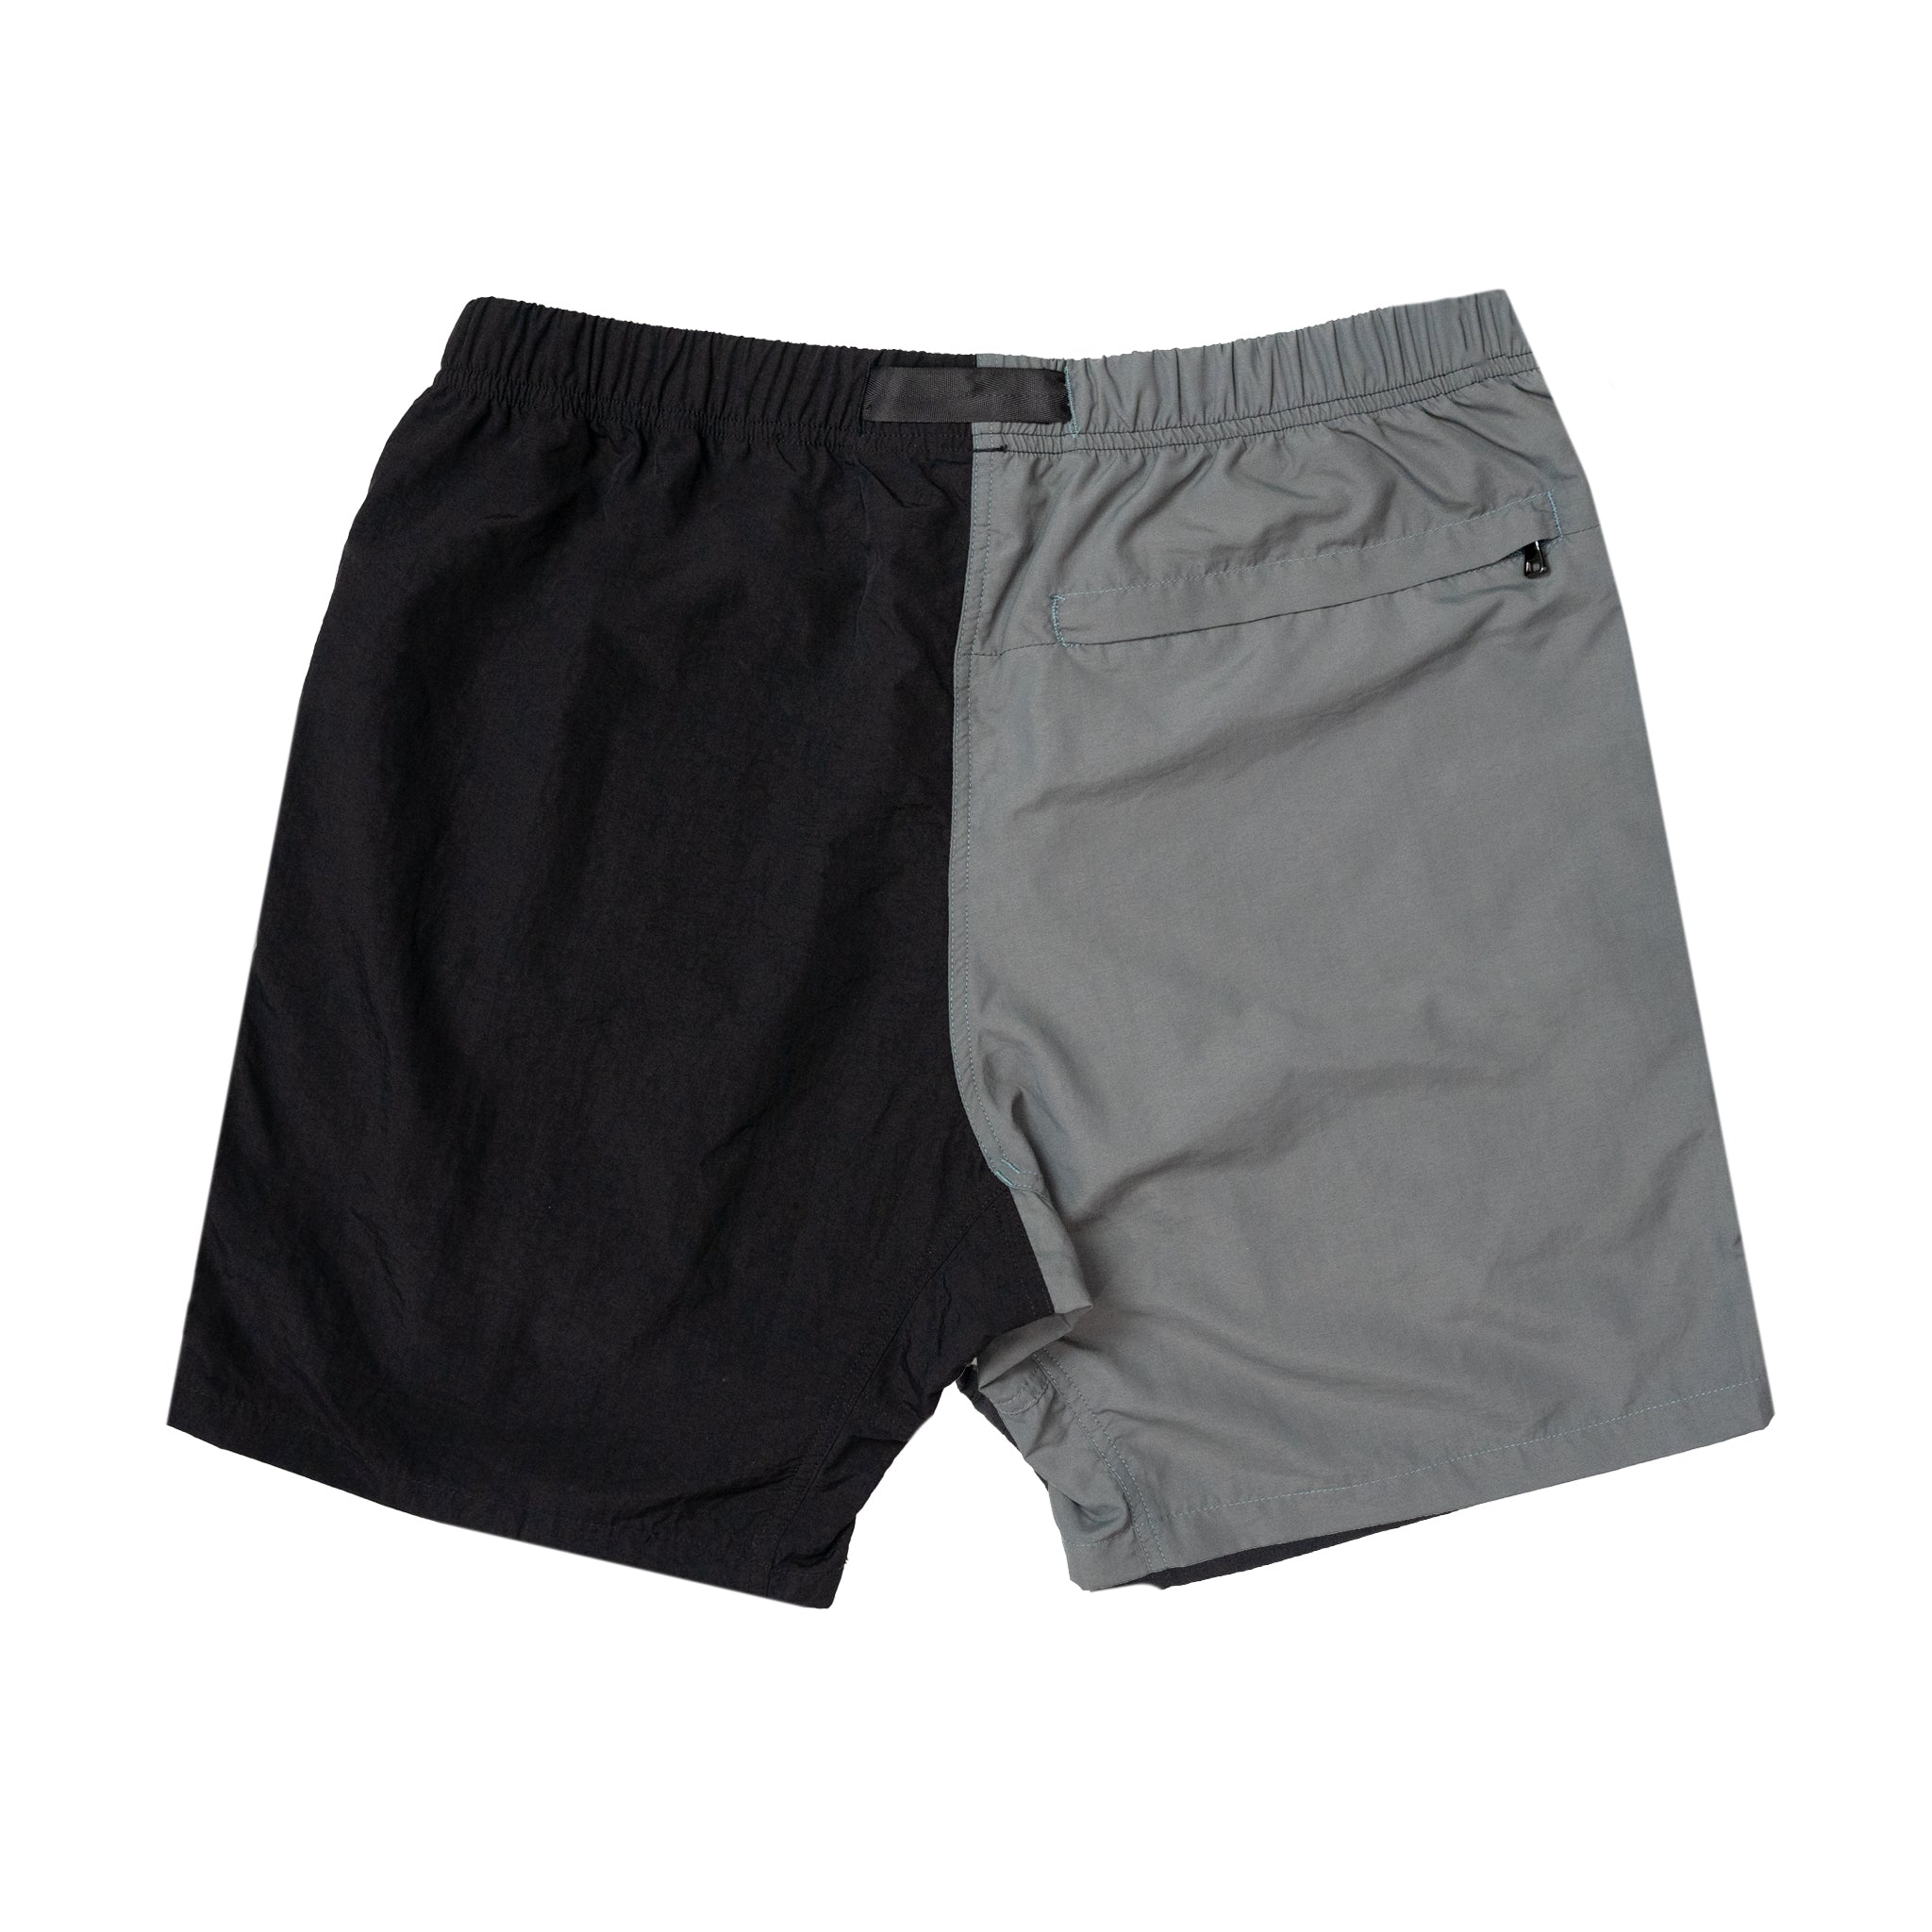 Black/Grey Duotone Sierra Climbing Shorts